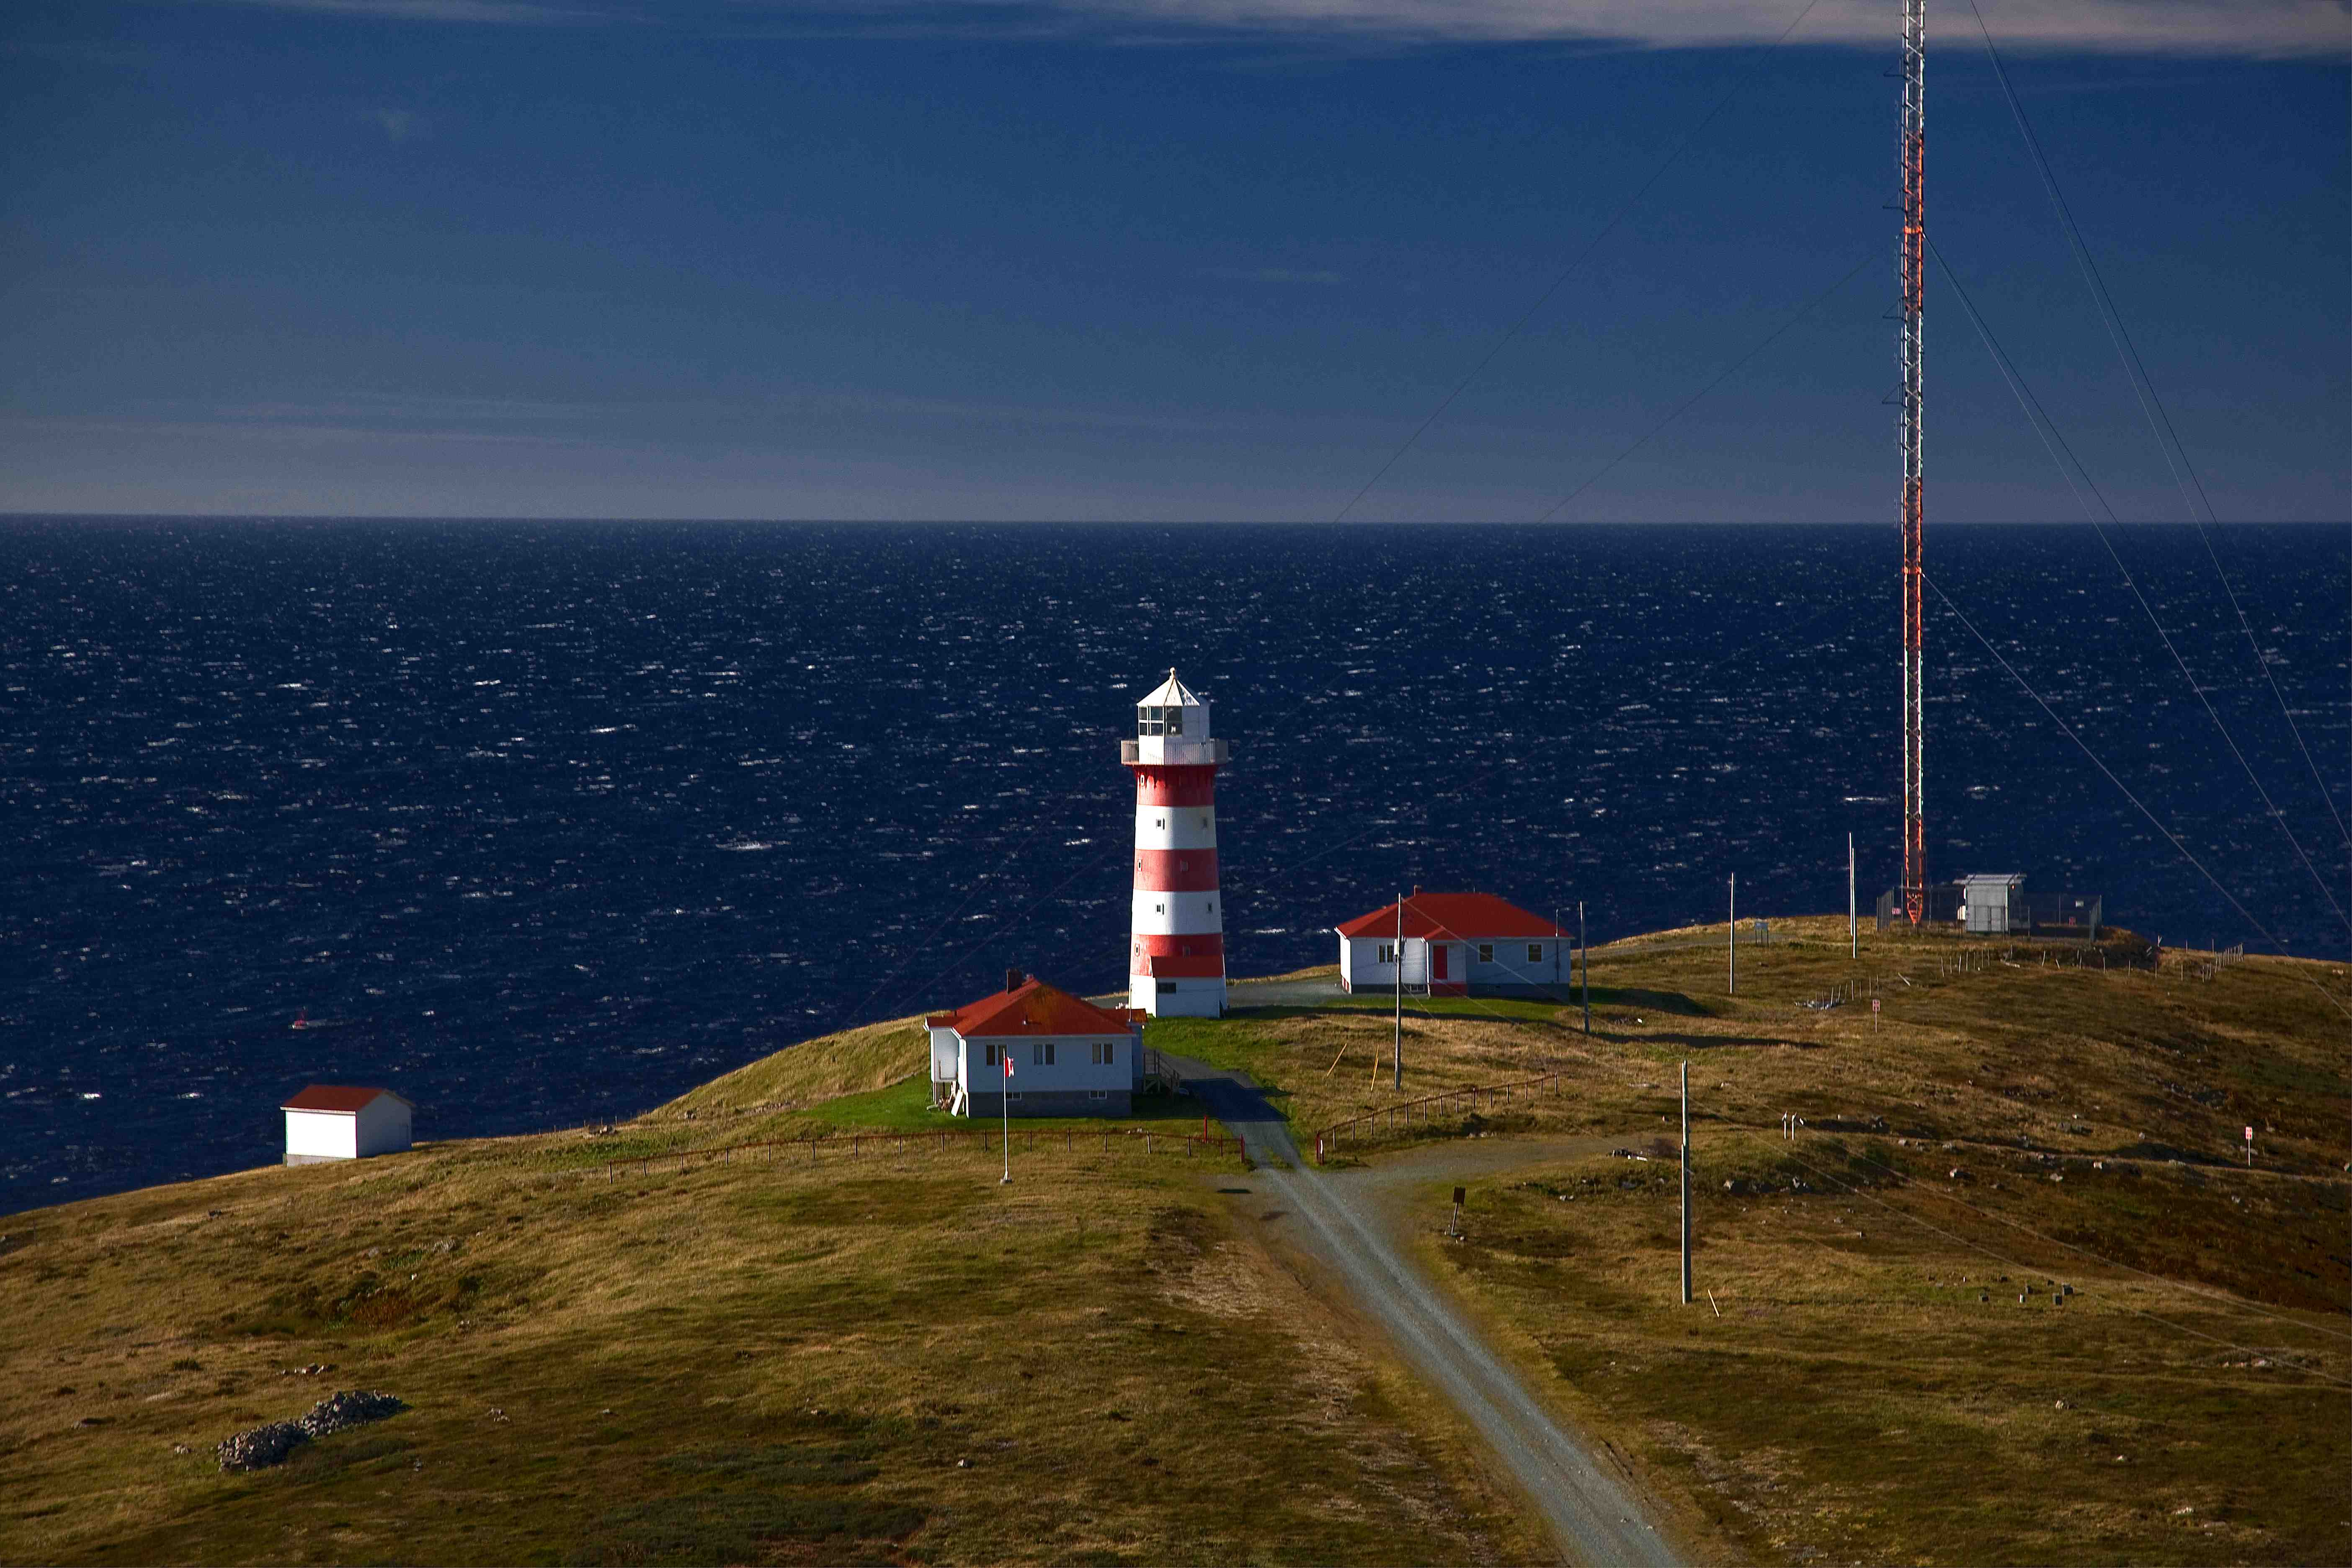 Cape Pine lighthouse, Newfoundland